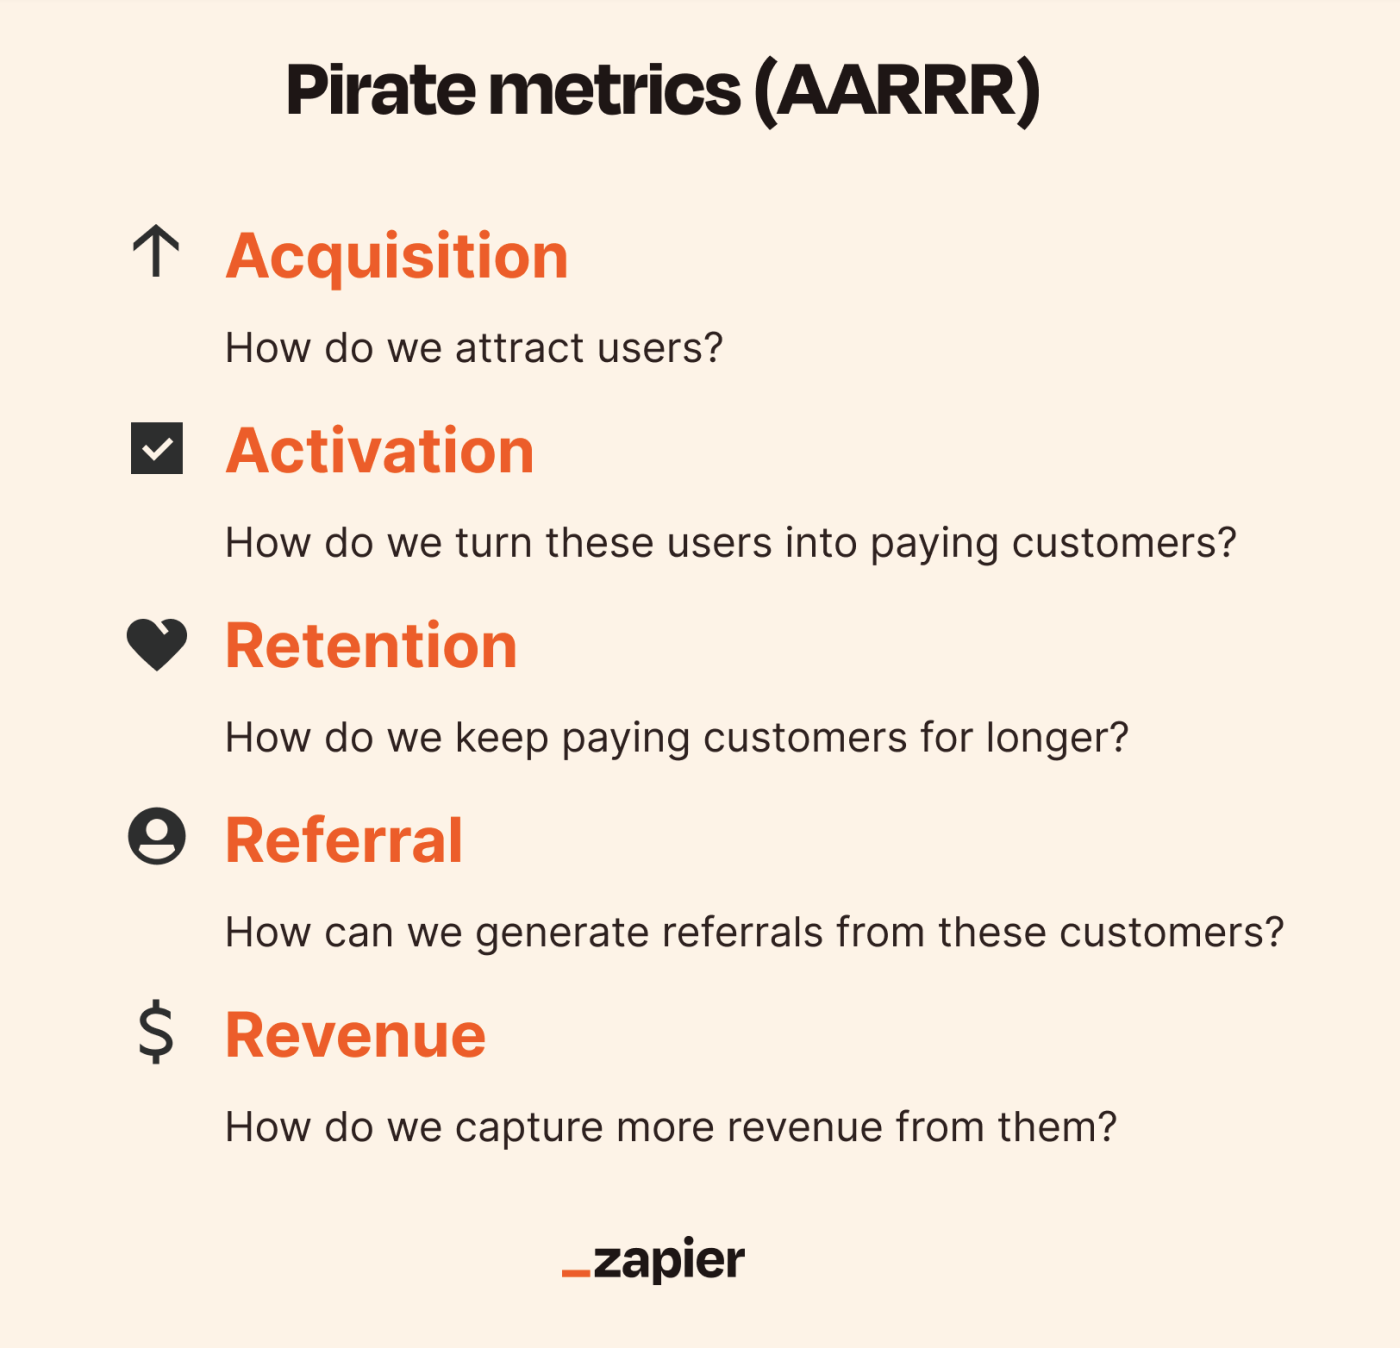 An infographic displaying the pirate metrics